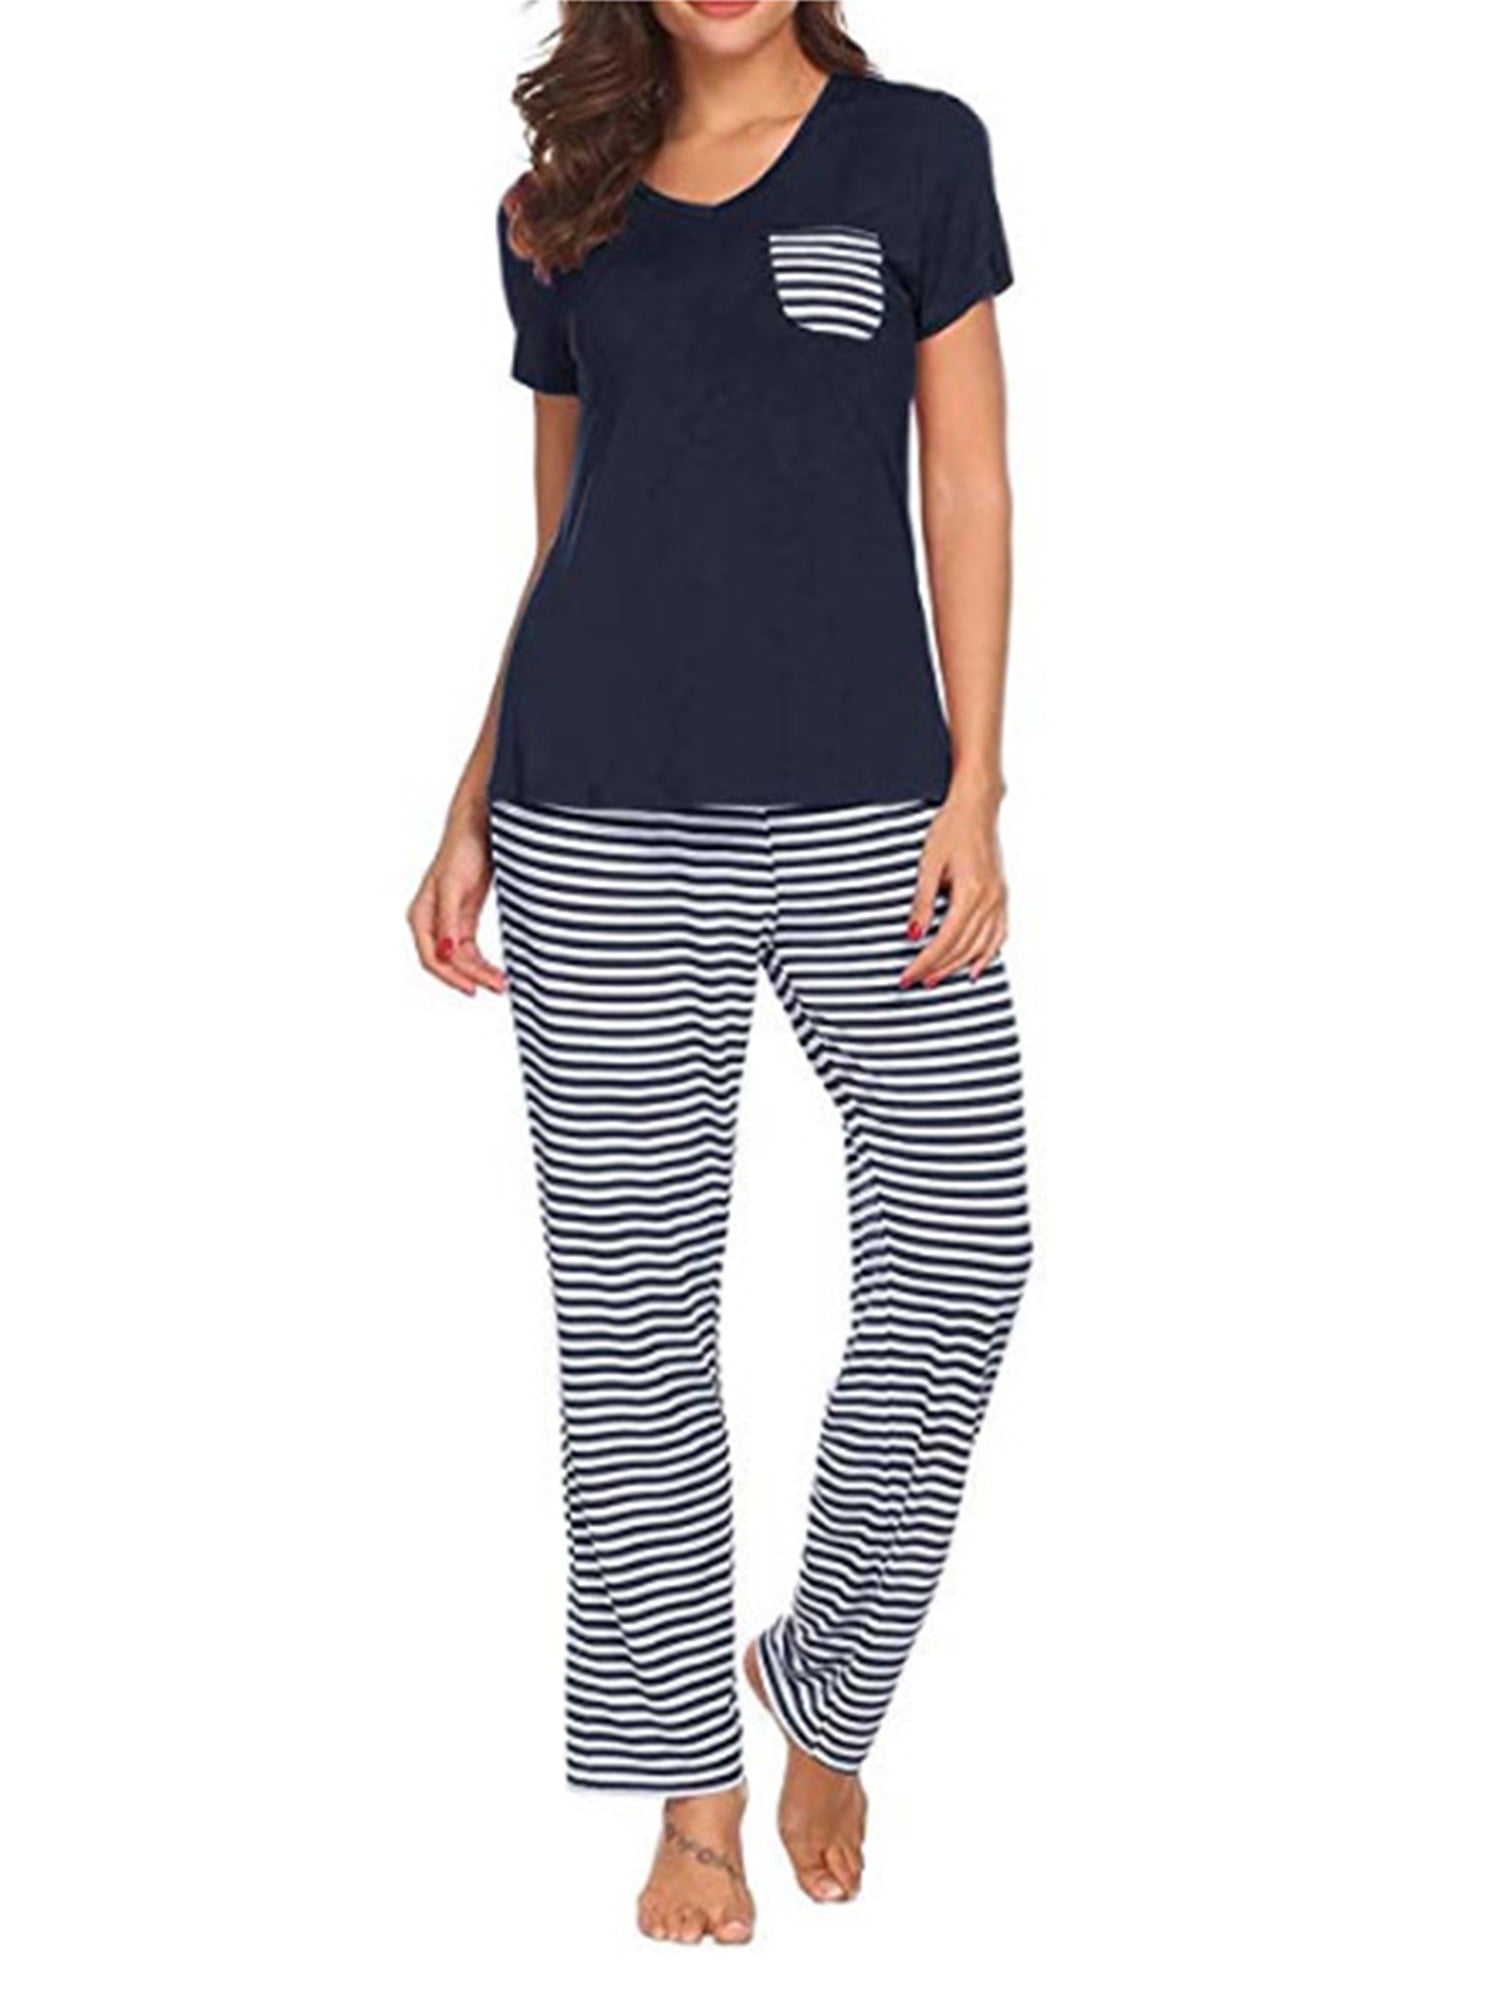 EISHOPEER Womens Pajama Set Short Sleeve Tops and Pants Soft Sleepwear Pjs Sets XS-XXL 